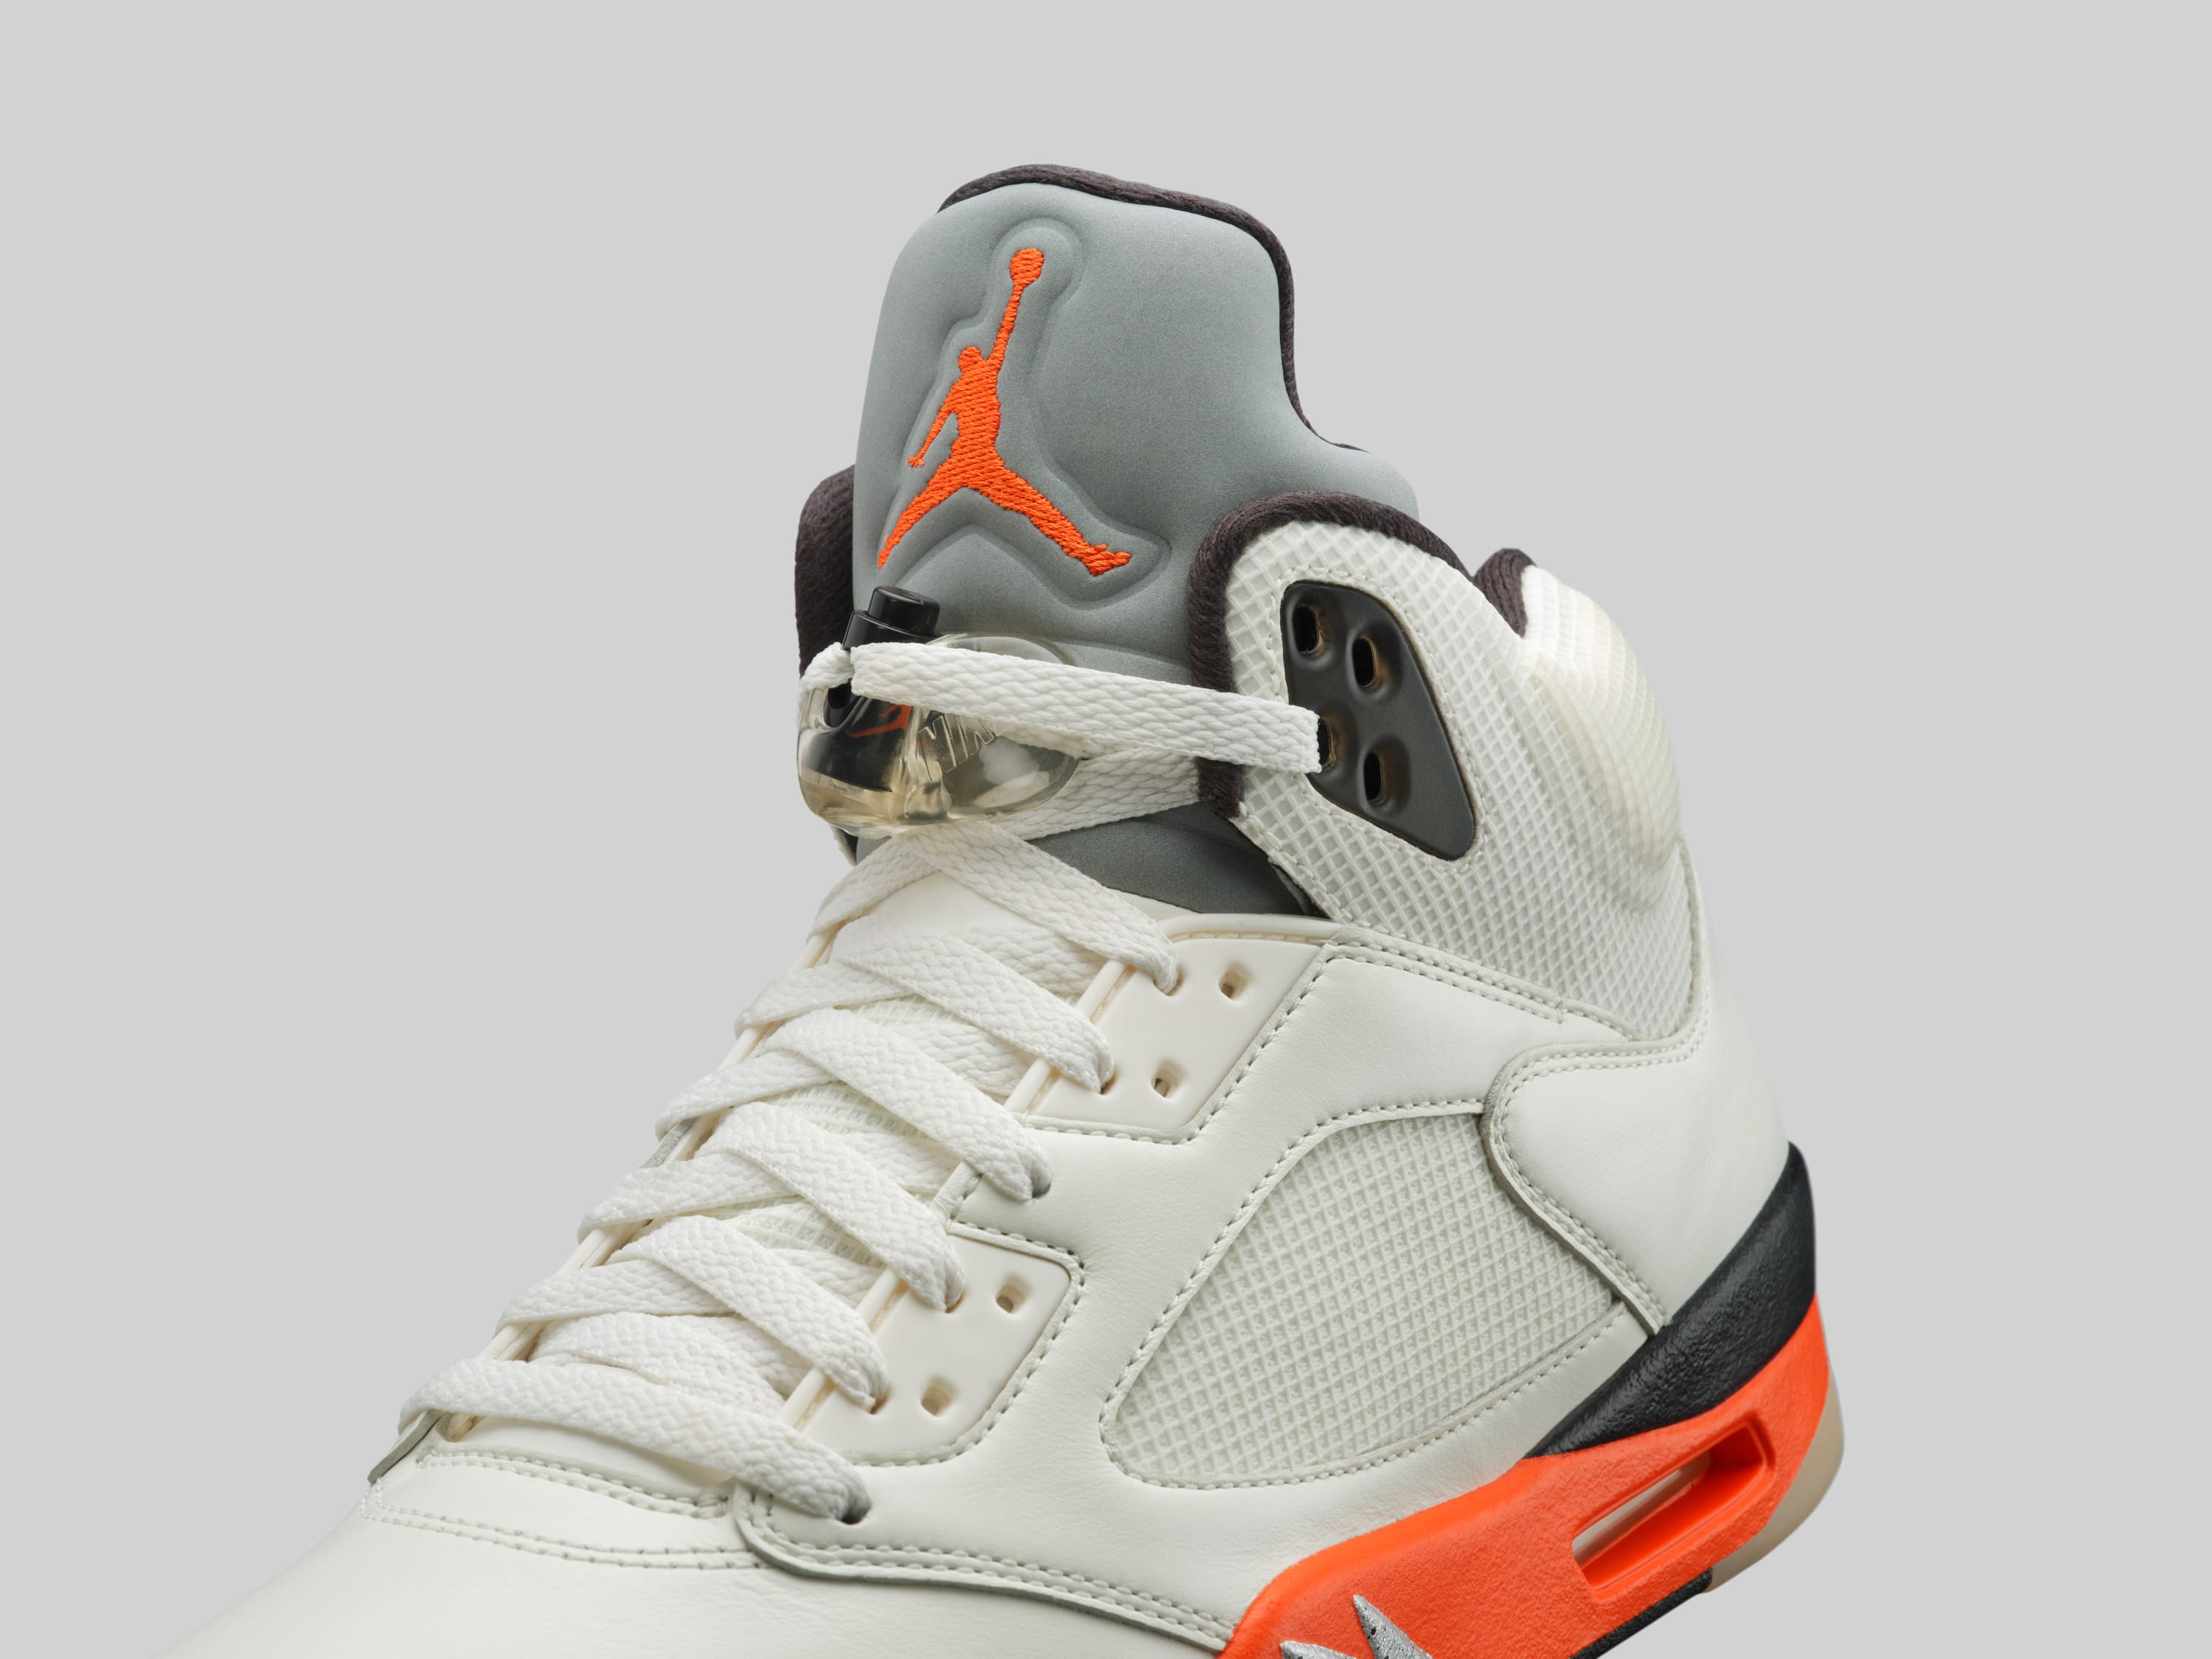 Orange Blaze' Air Jordan 5s Are Releasing Next Month